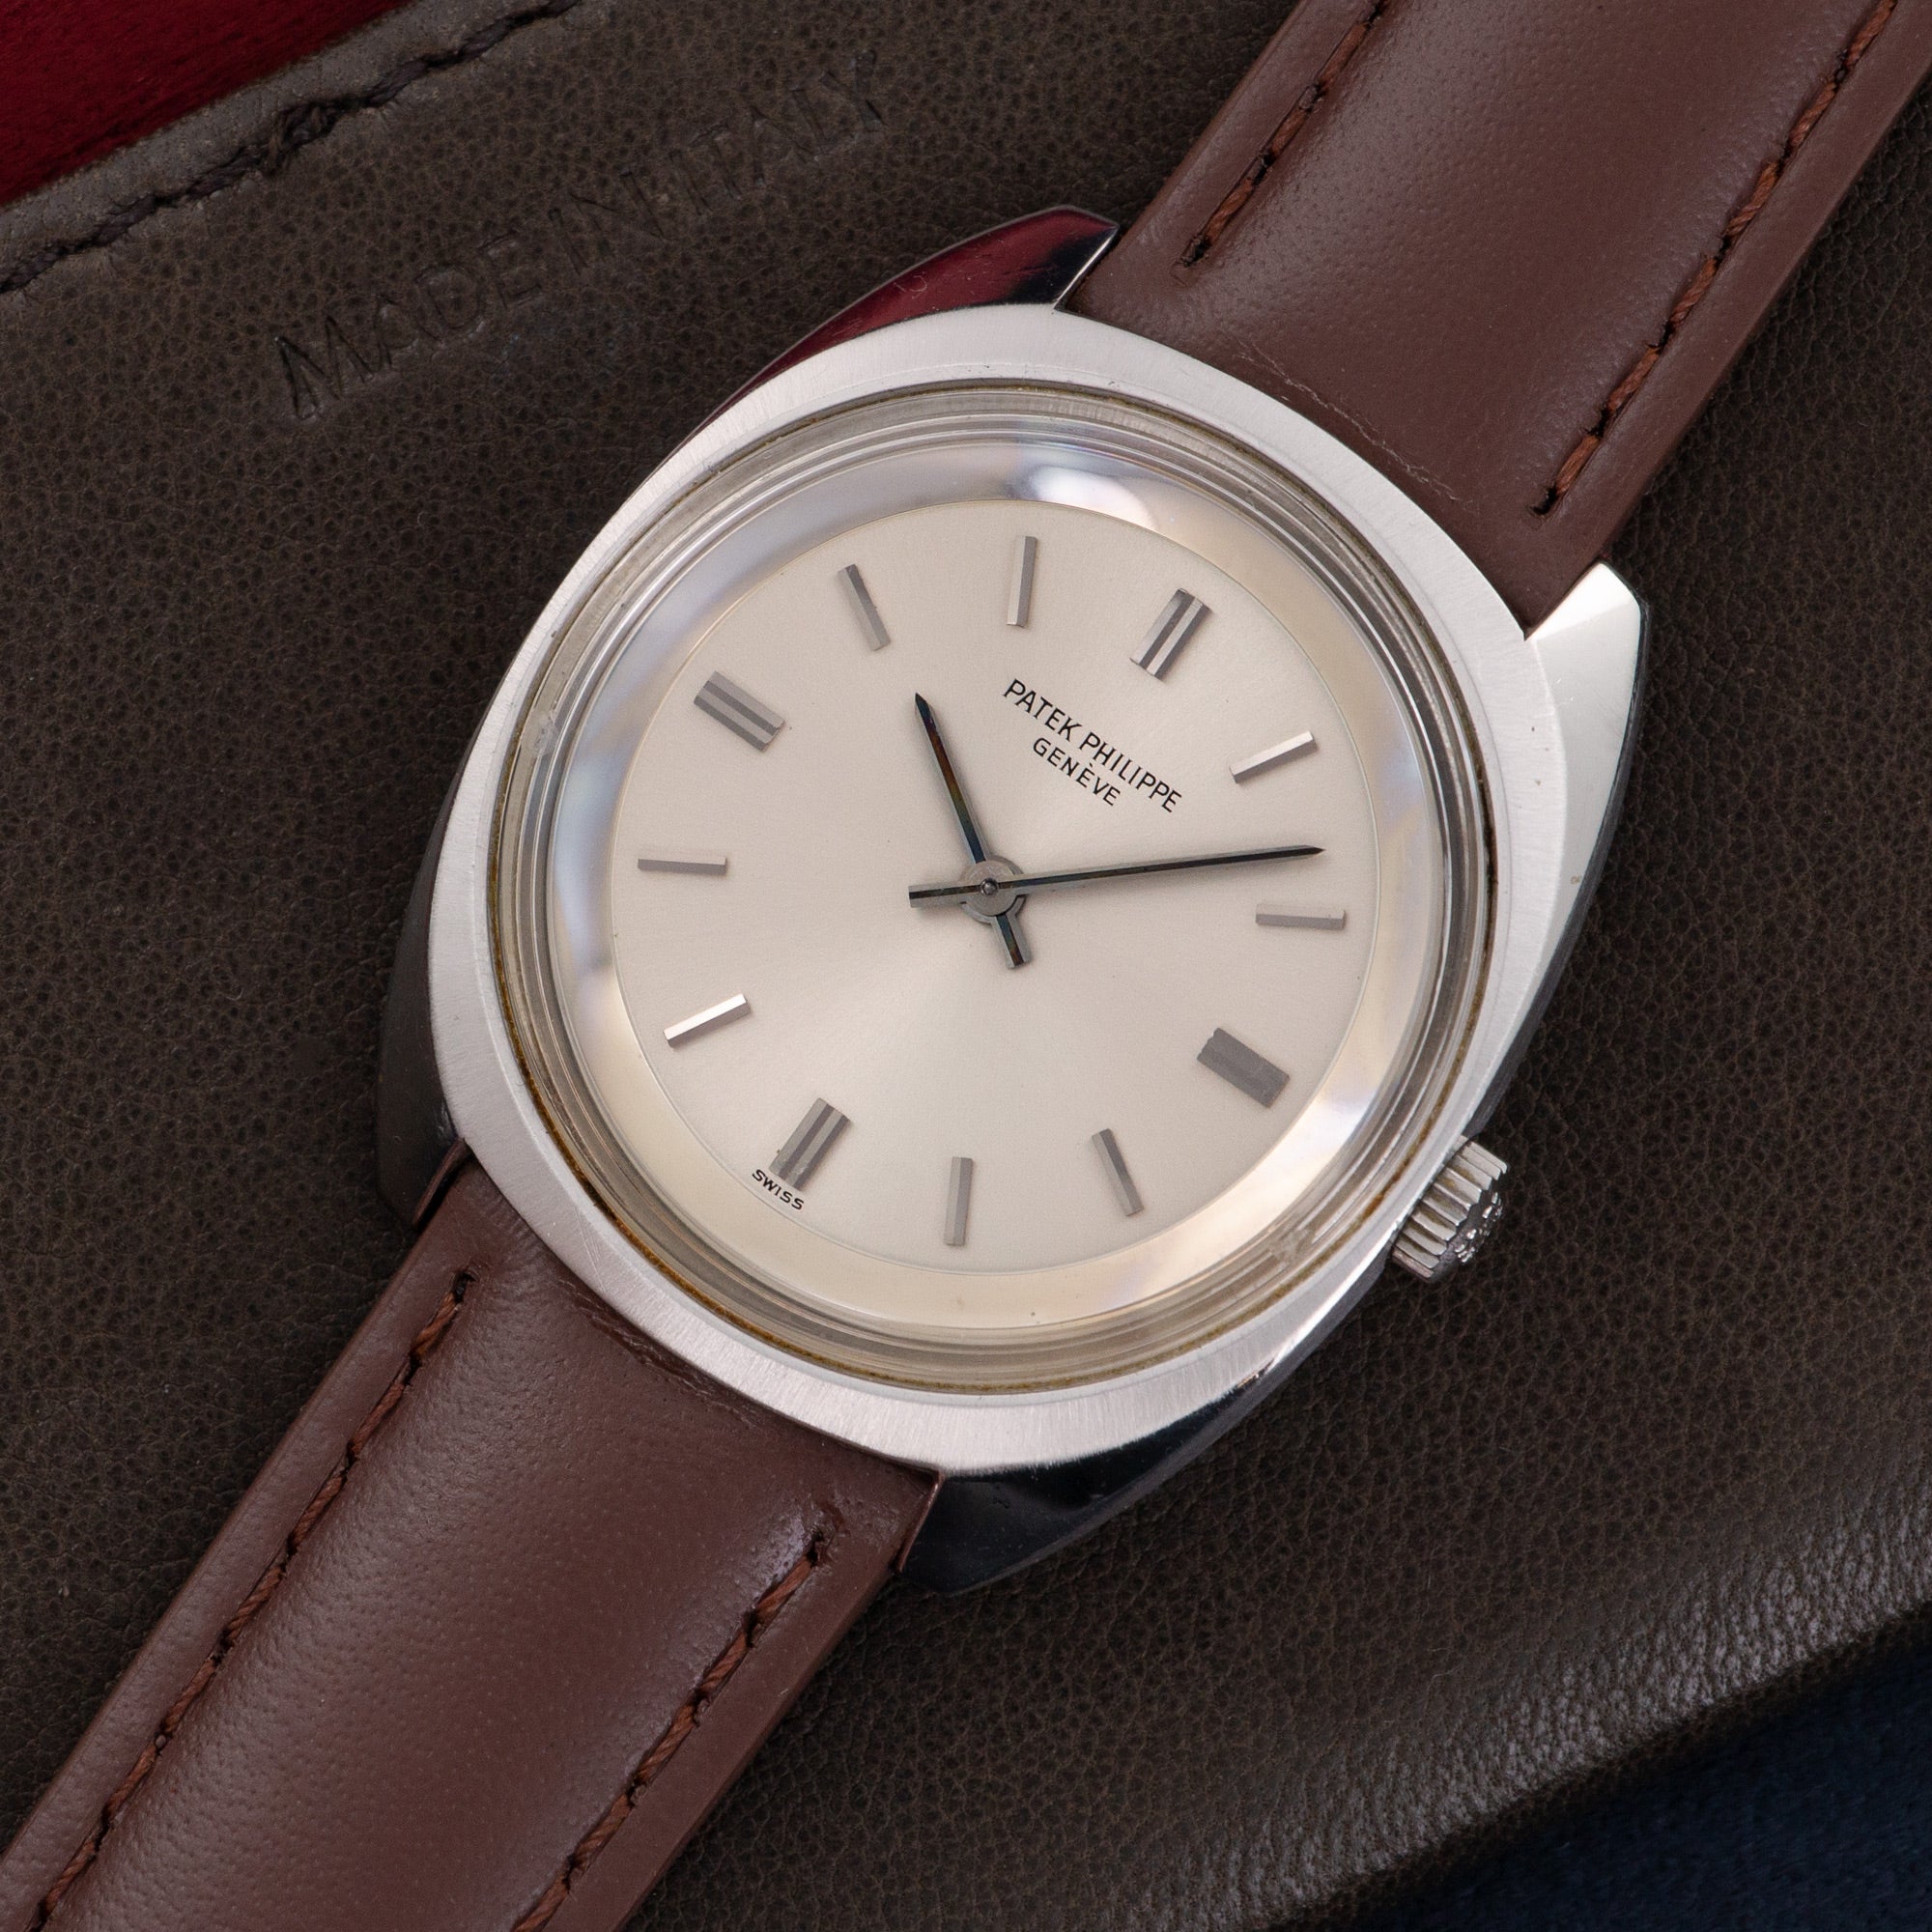 Patek Philippe - Patek Philippe Steel Watch Ref. 3579 - The Keystone Watches